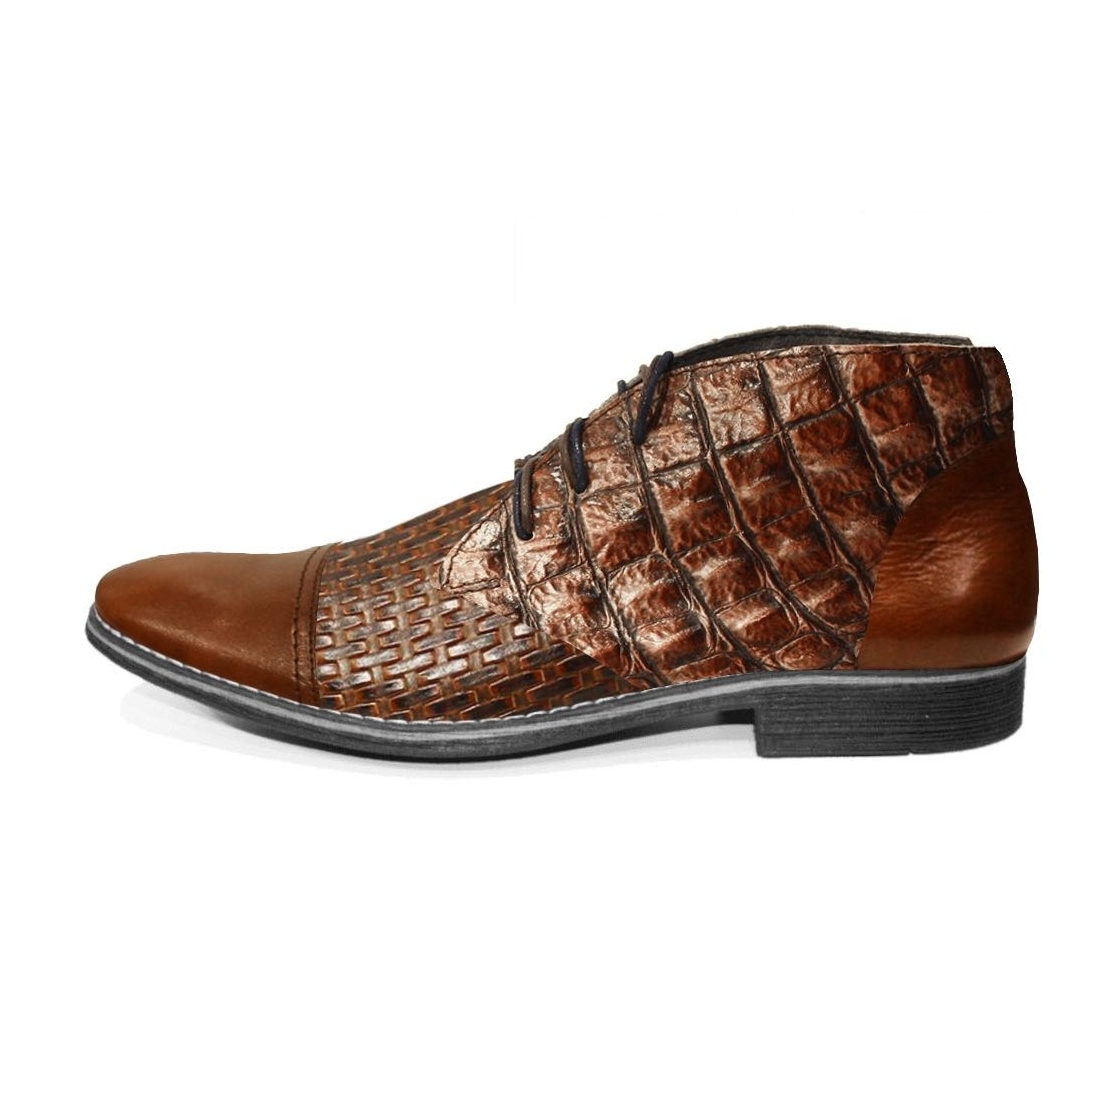 Modello Browerro - Chukka Boots - Handmade Colorful Italian Leather Shoes